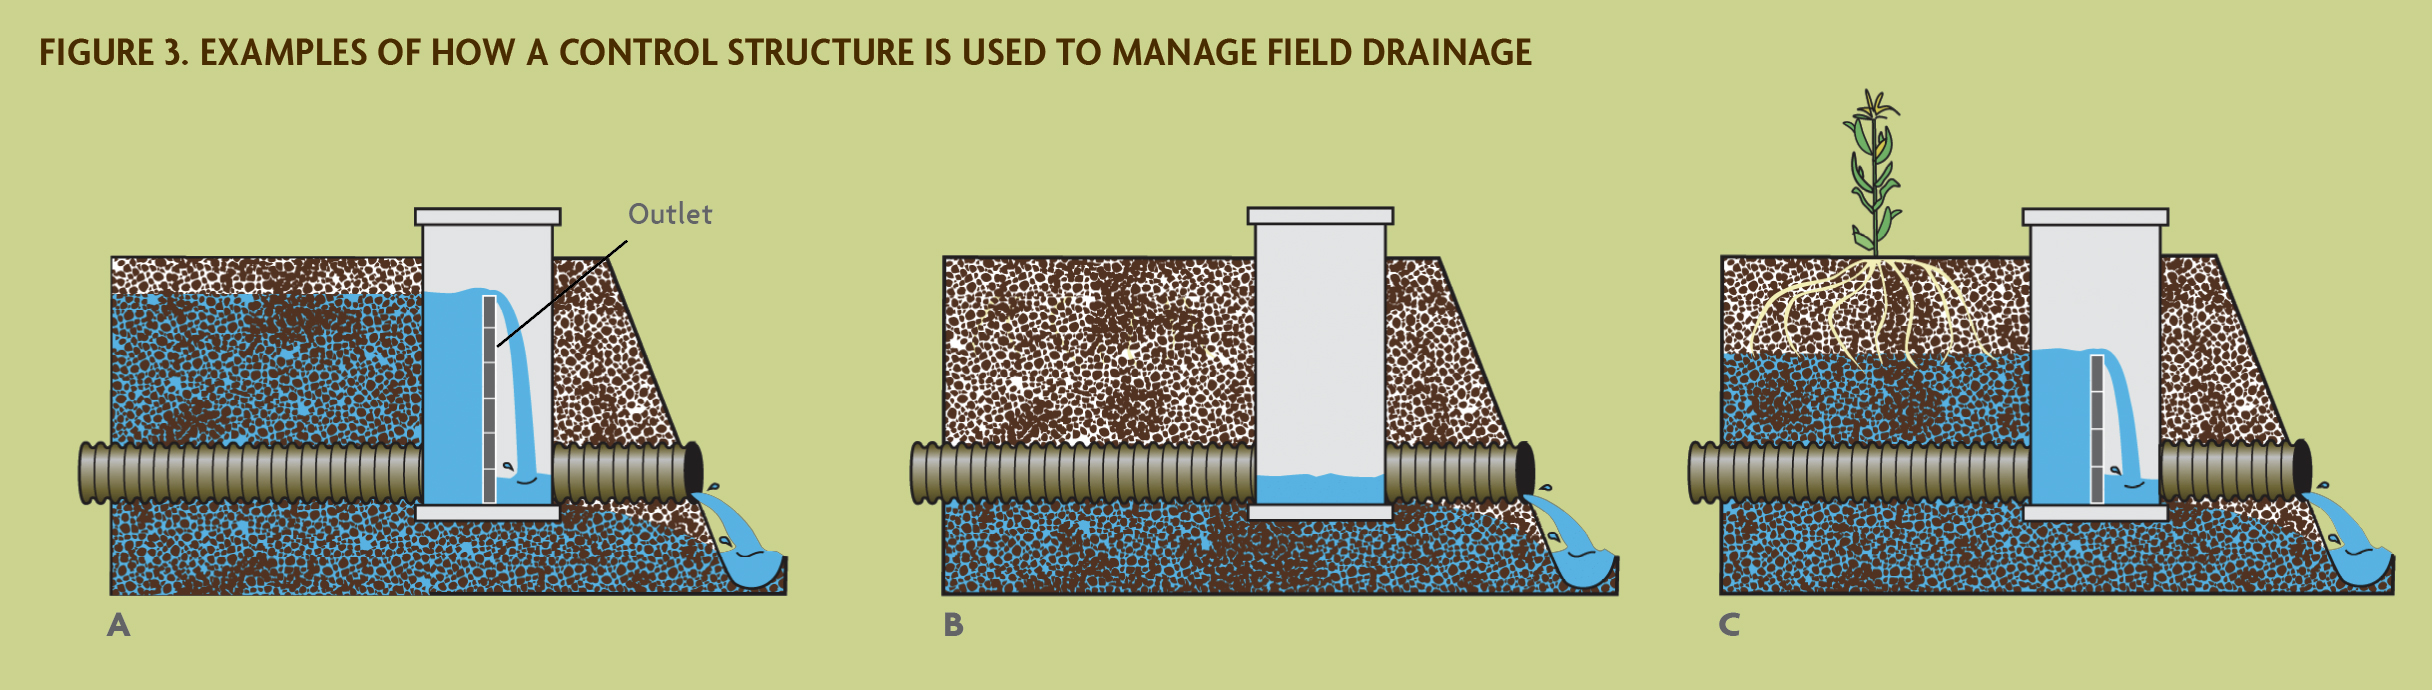 Drain Water Management - SARE